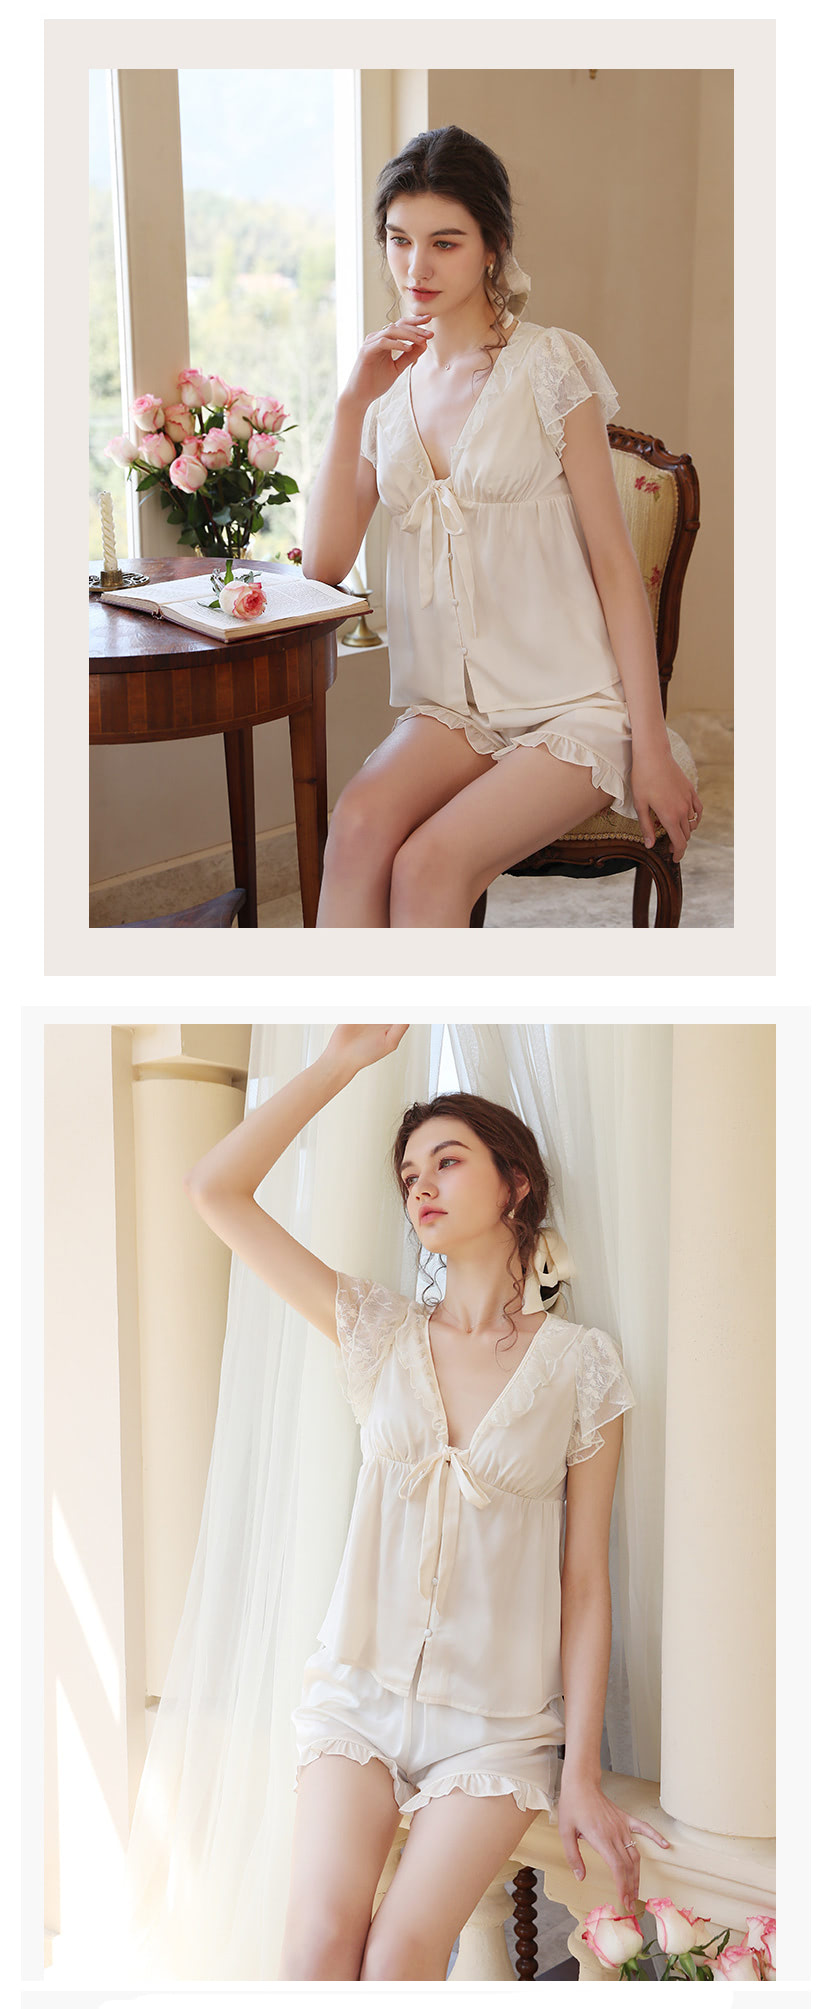 Lace-Satin-Sleepwear-Home-Clothes-Loungewear-Pajama-with-Shorts18.jpg